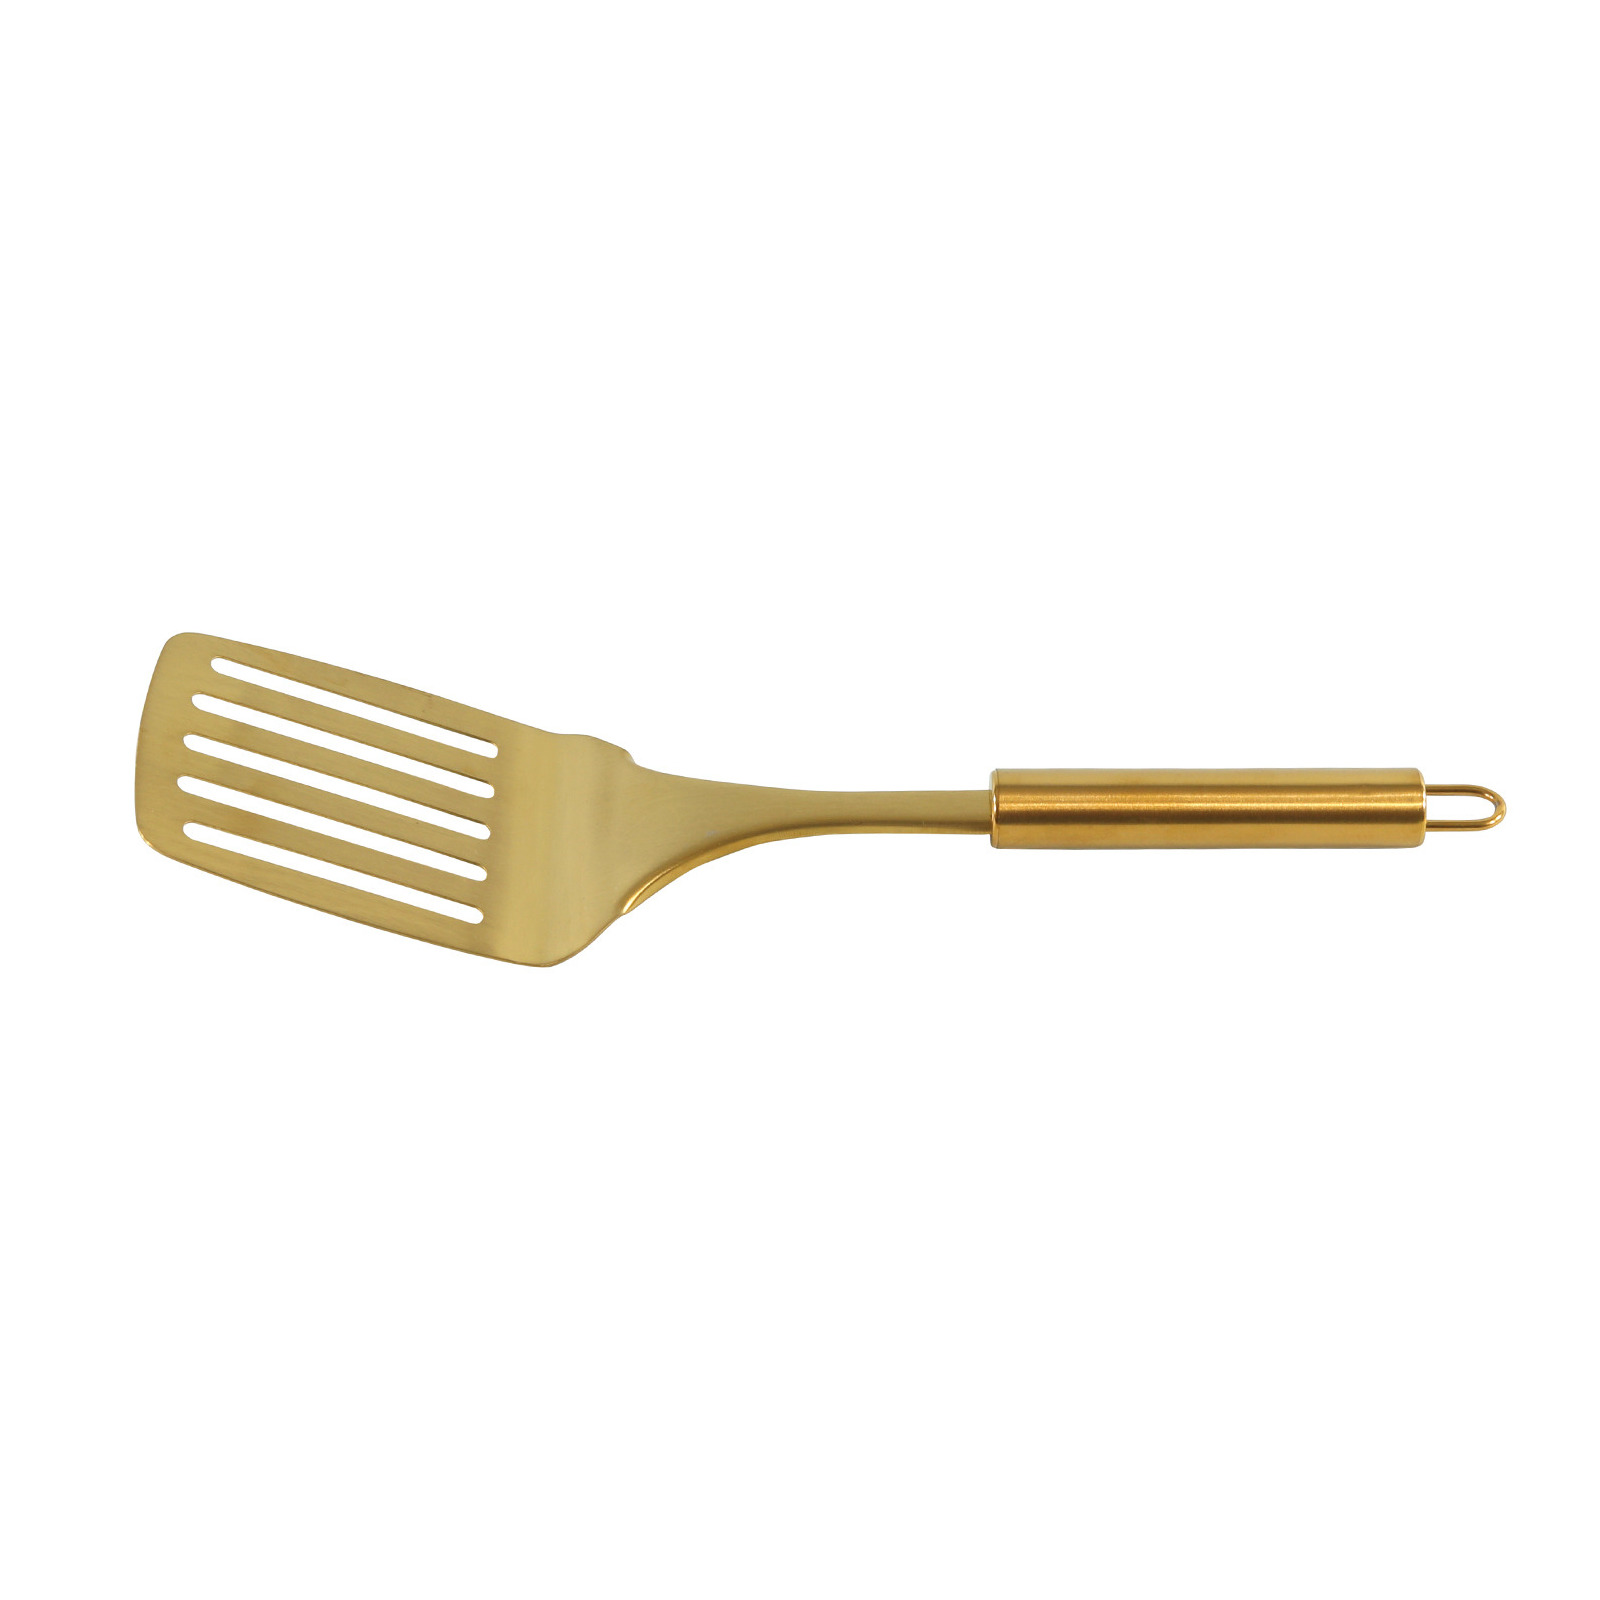 RVS bakspatels-bakspanen goud 32 cm keukengerei